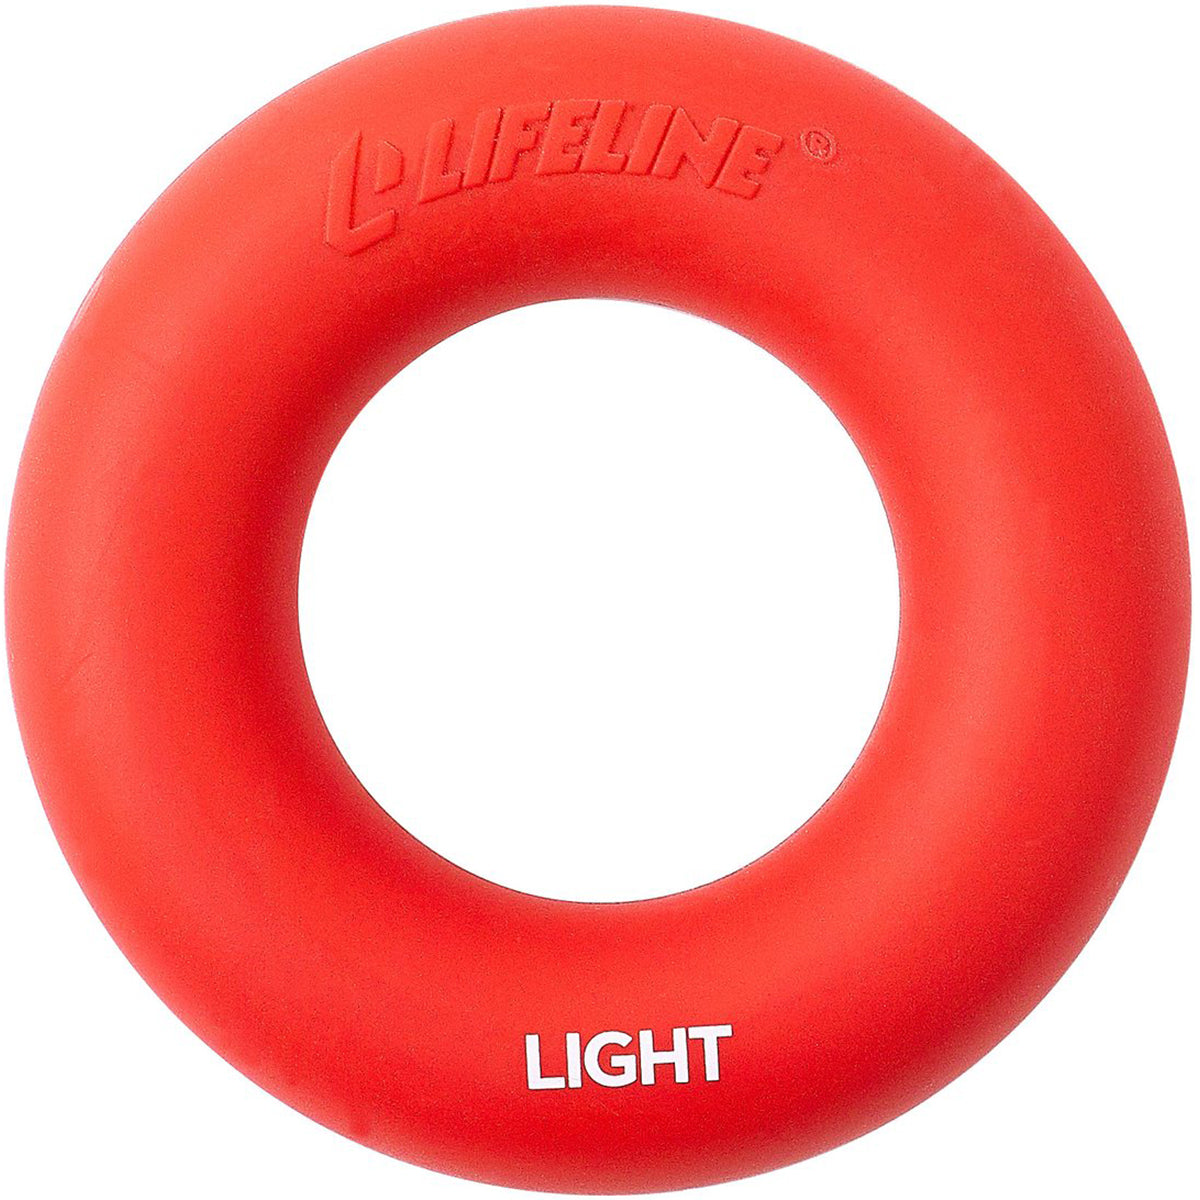 Lifeline USA Fitness Pro Grip Ring - Light Resistance - Multicolor Lifeline USA